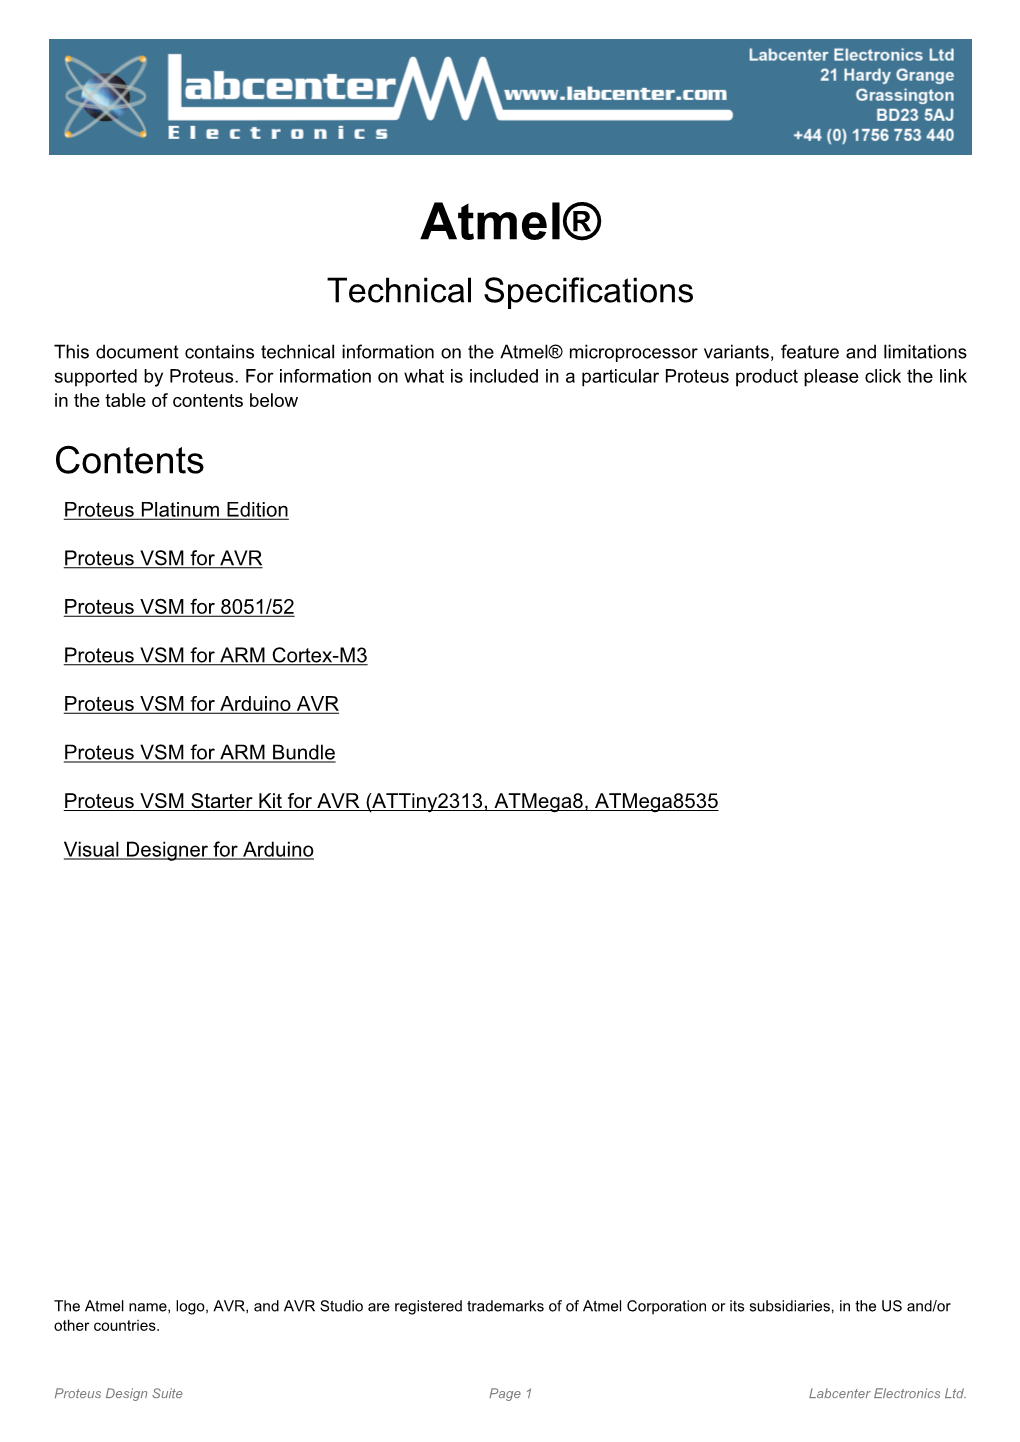 Proteus VSM Software for Atmel AVR Microprocessor